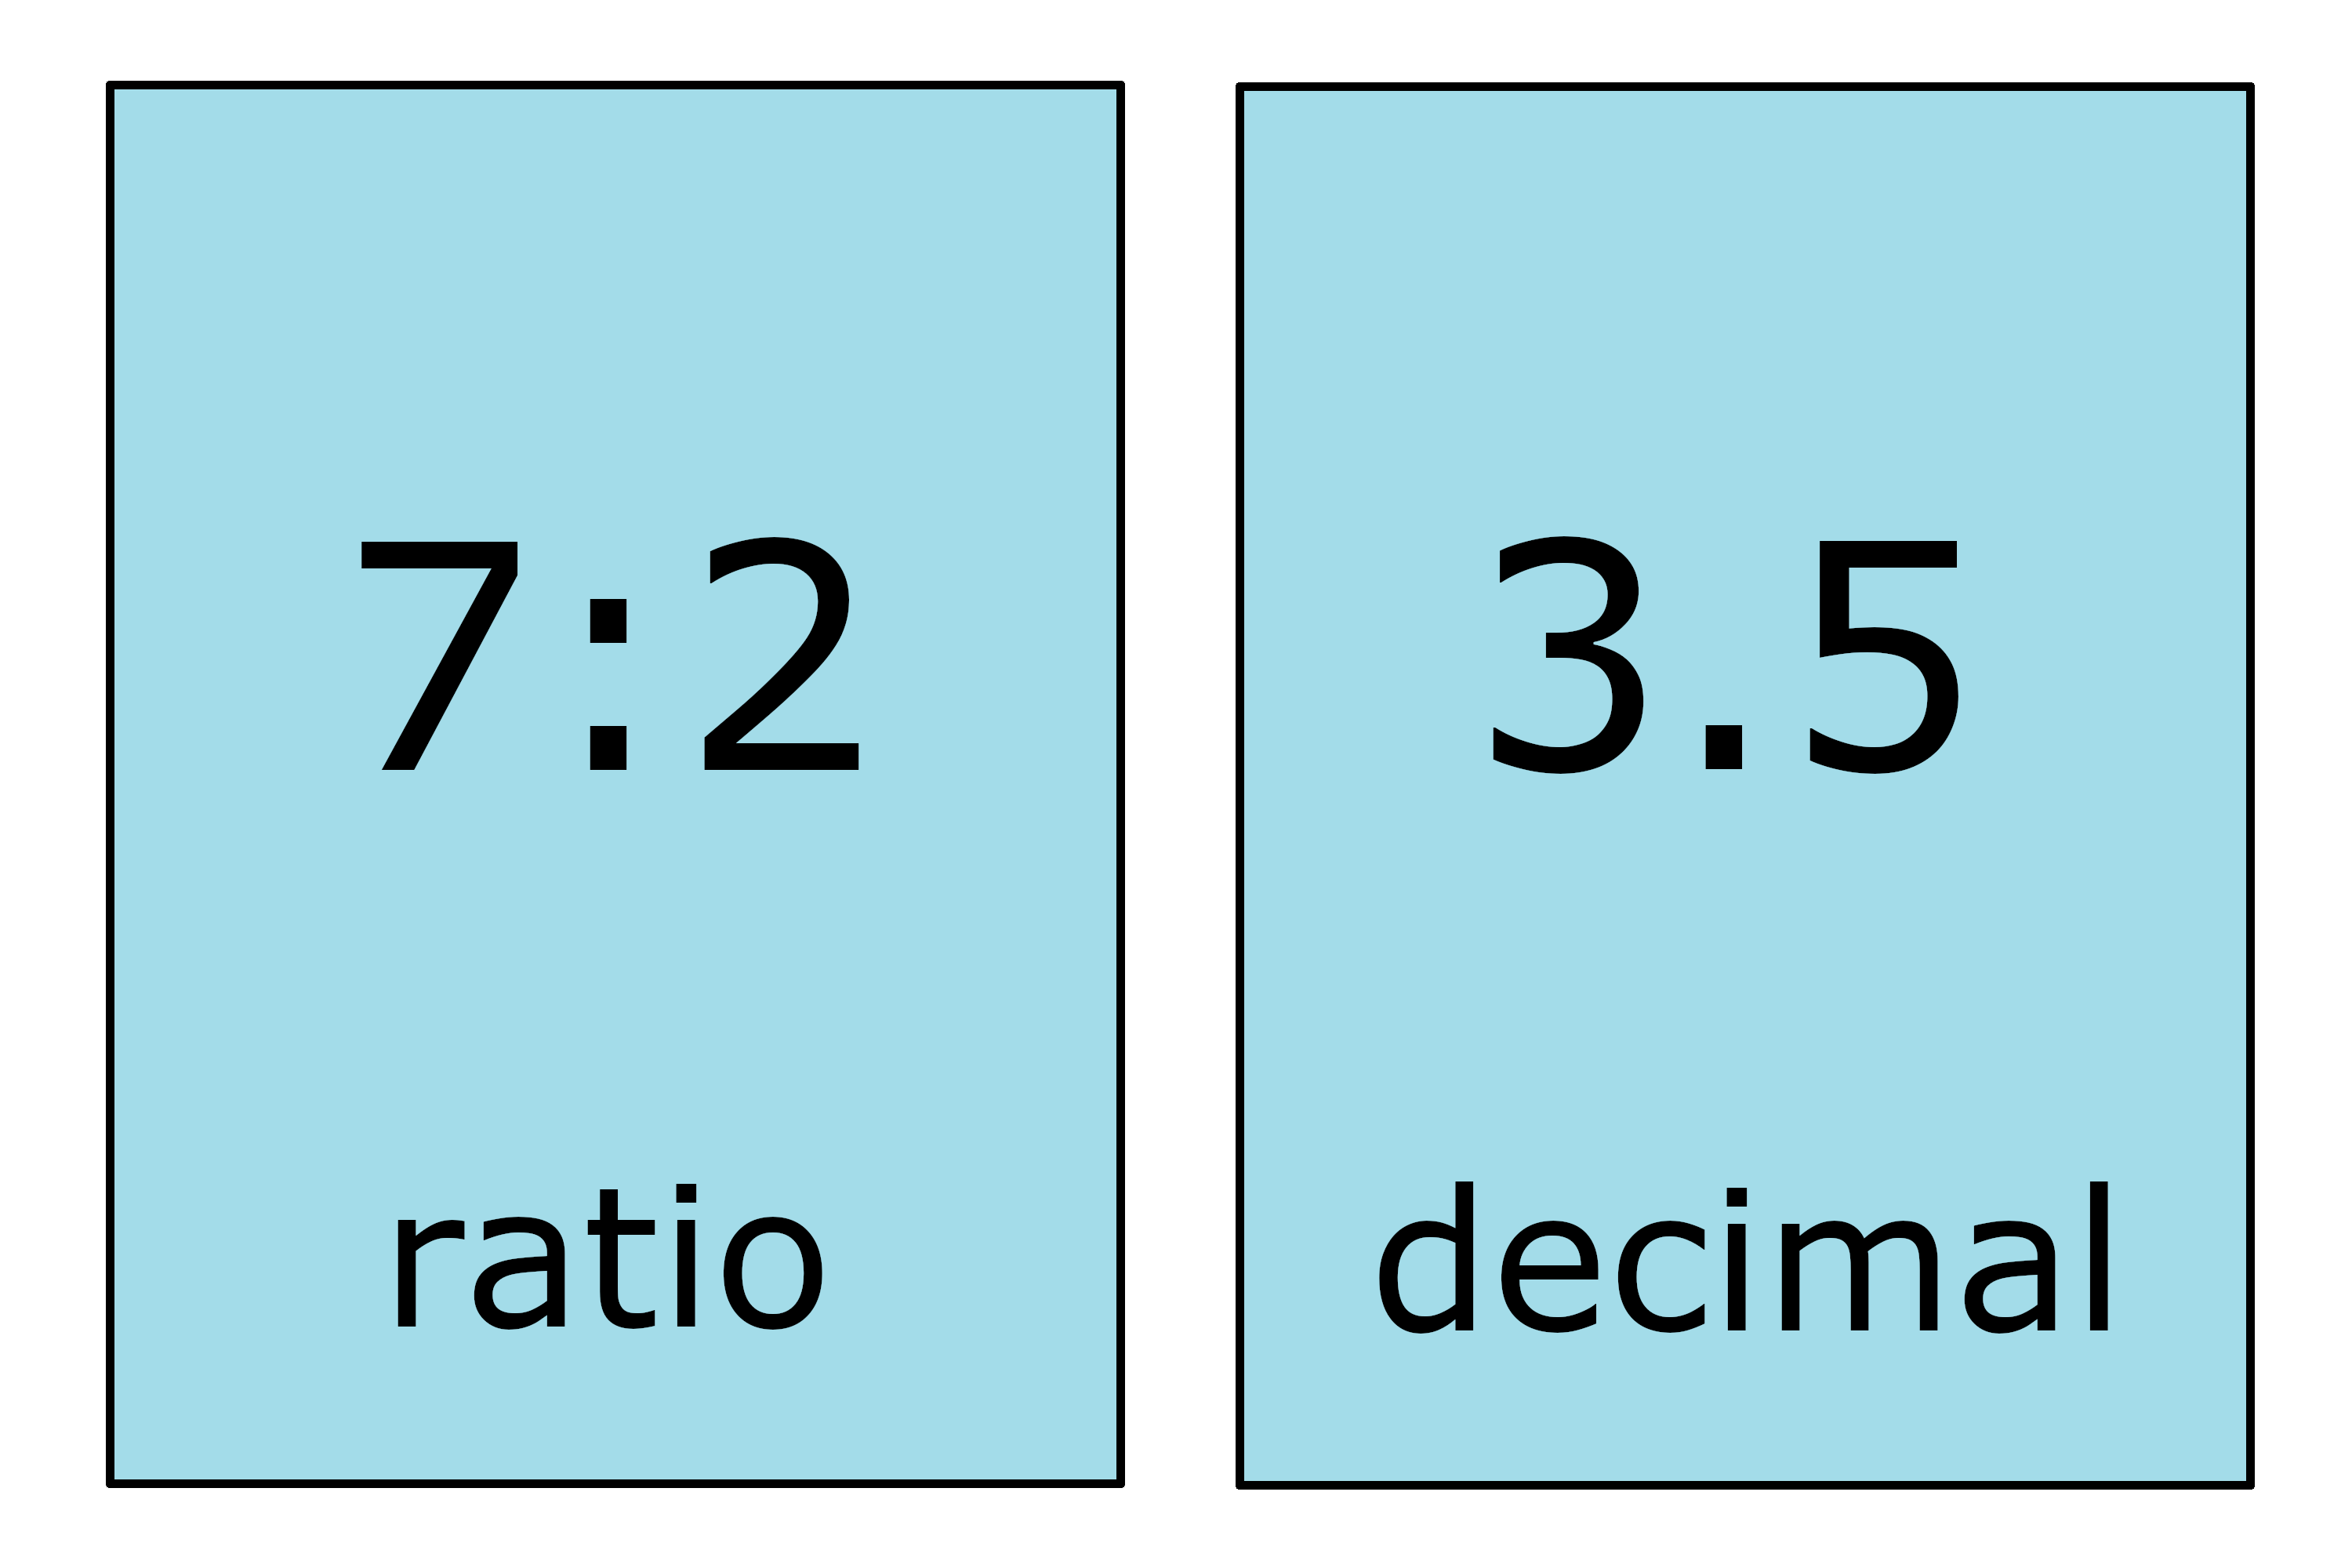 Ratio To Decimal Calculator Inch Calculator